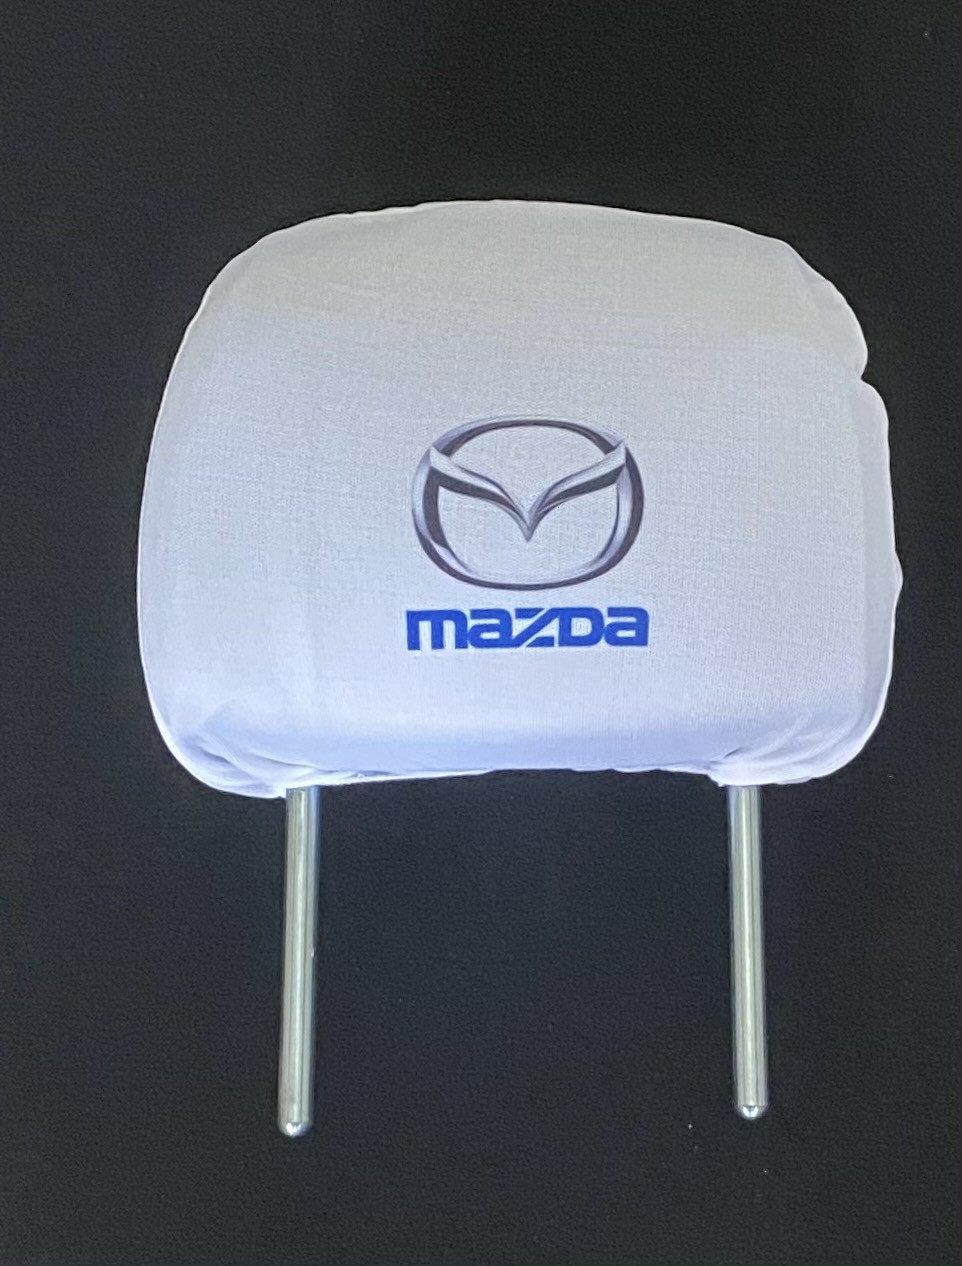 Biele návleky na opierky hlavy s logom Mazda - 2ks